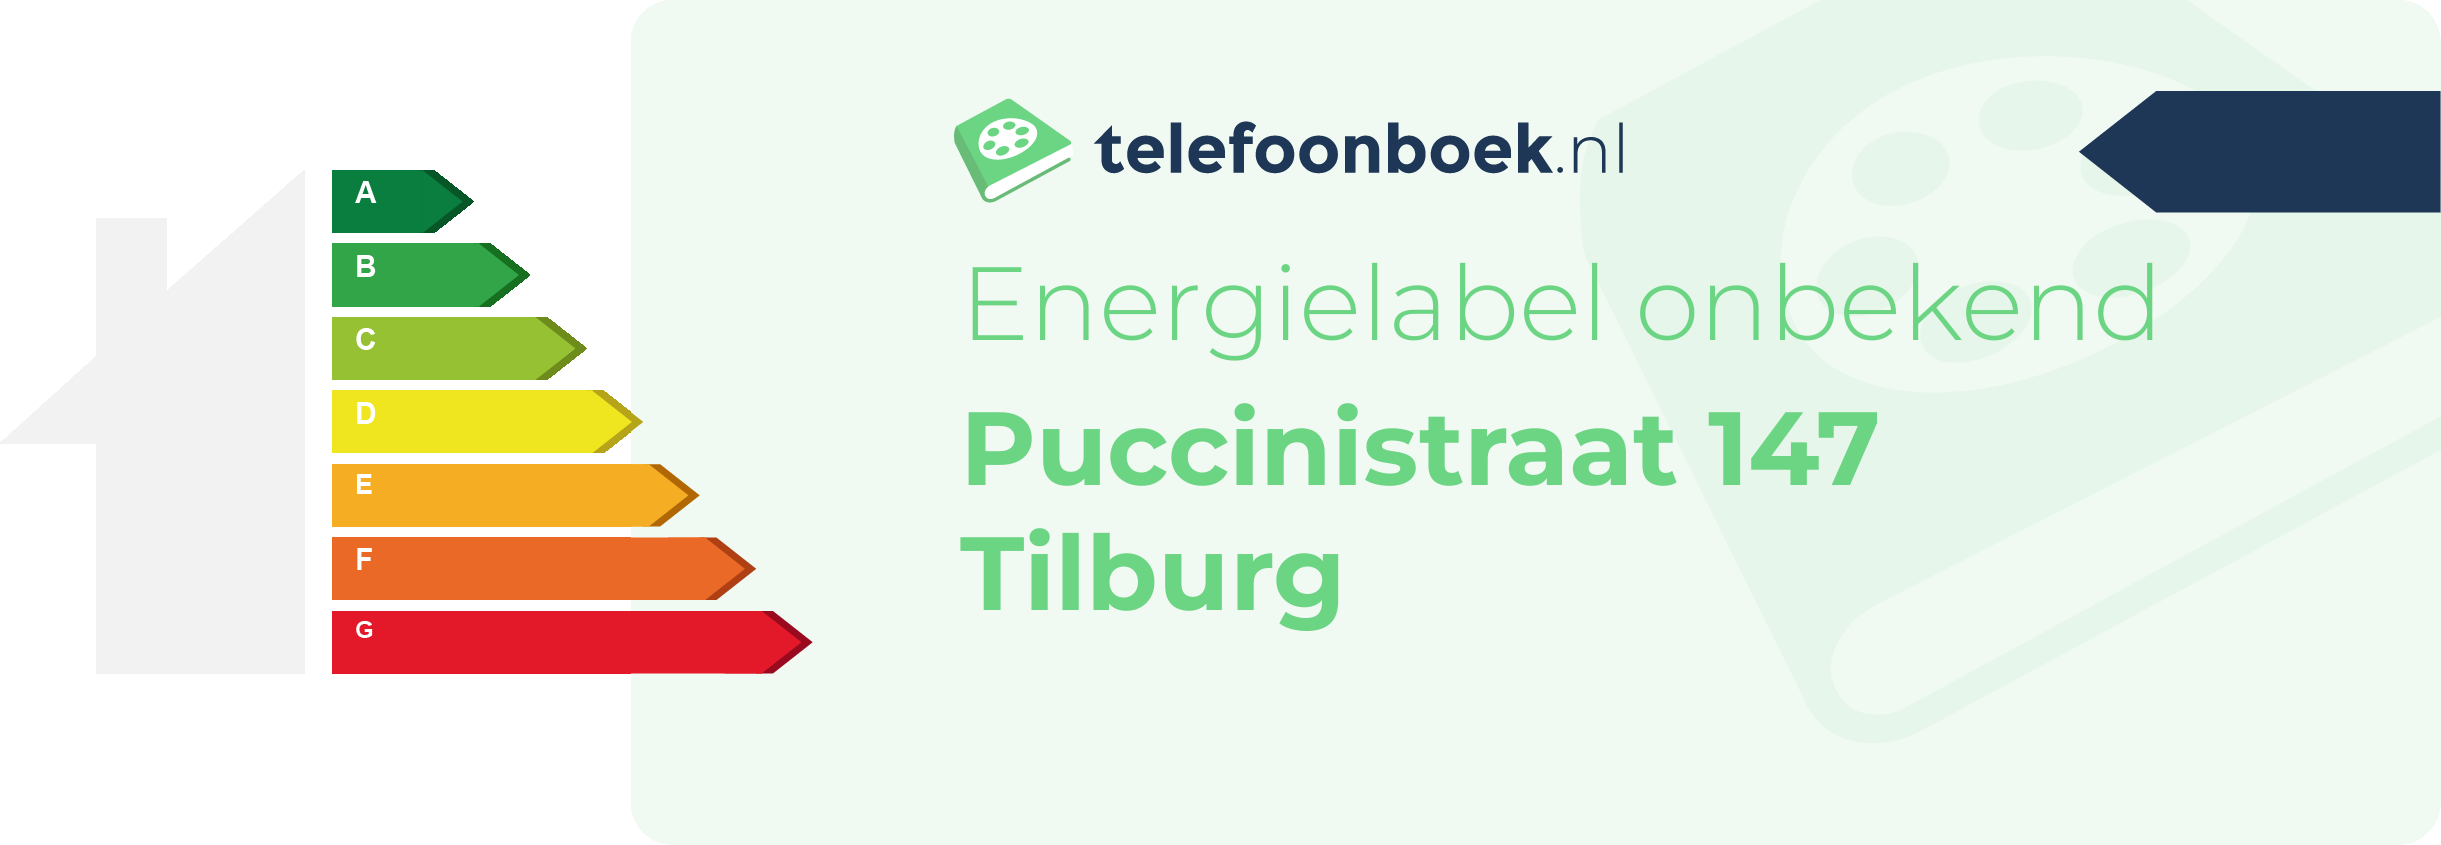 Energielabel Puccinistraat 147 Tilburg